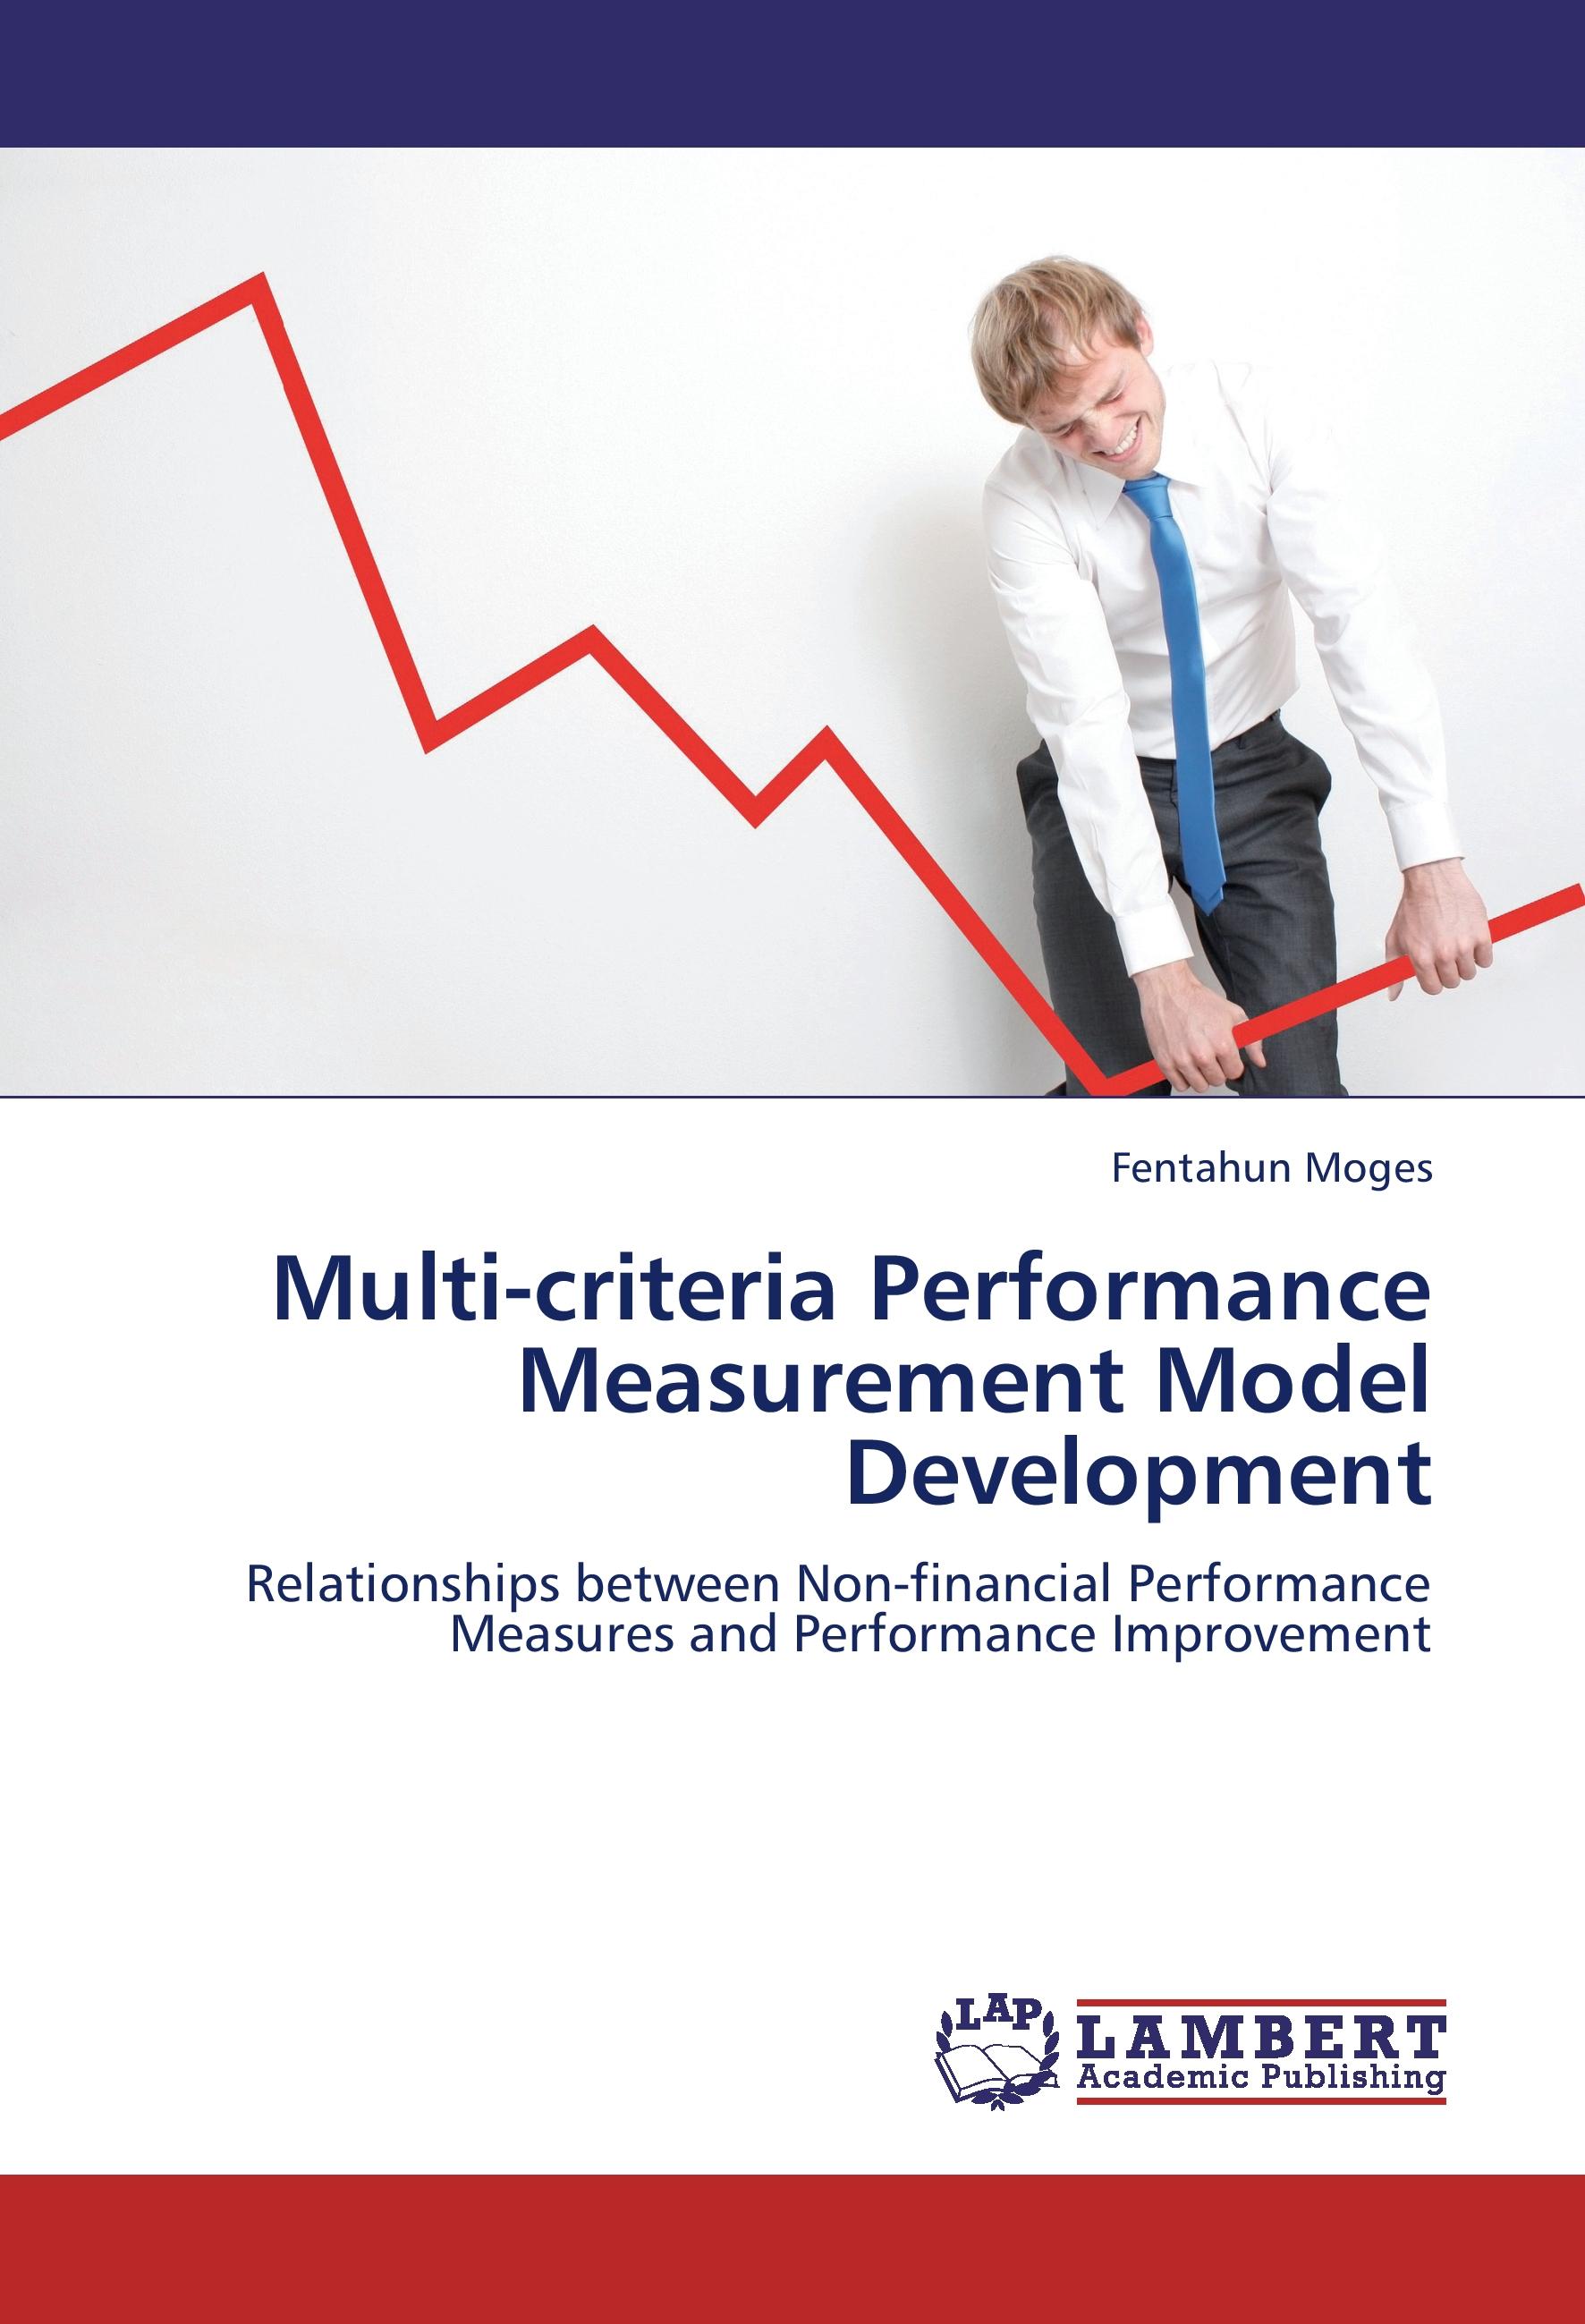 Multi-criteria Performance Measurement Model Development - Moges, Fentahun